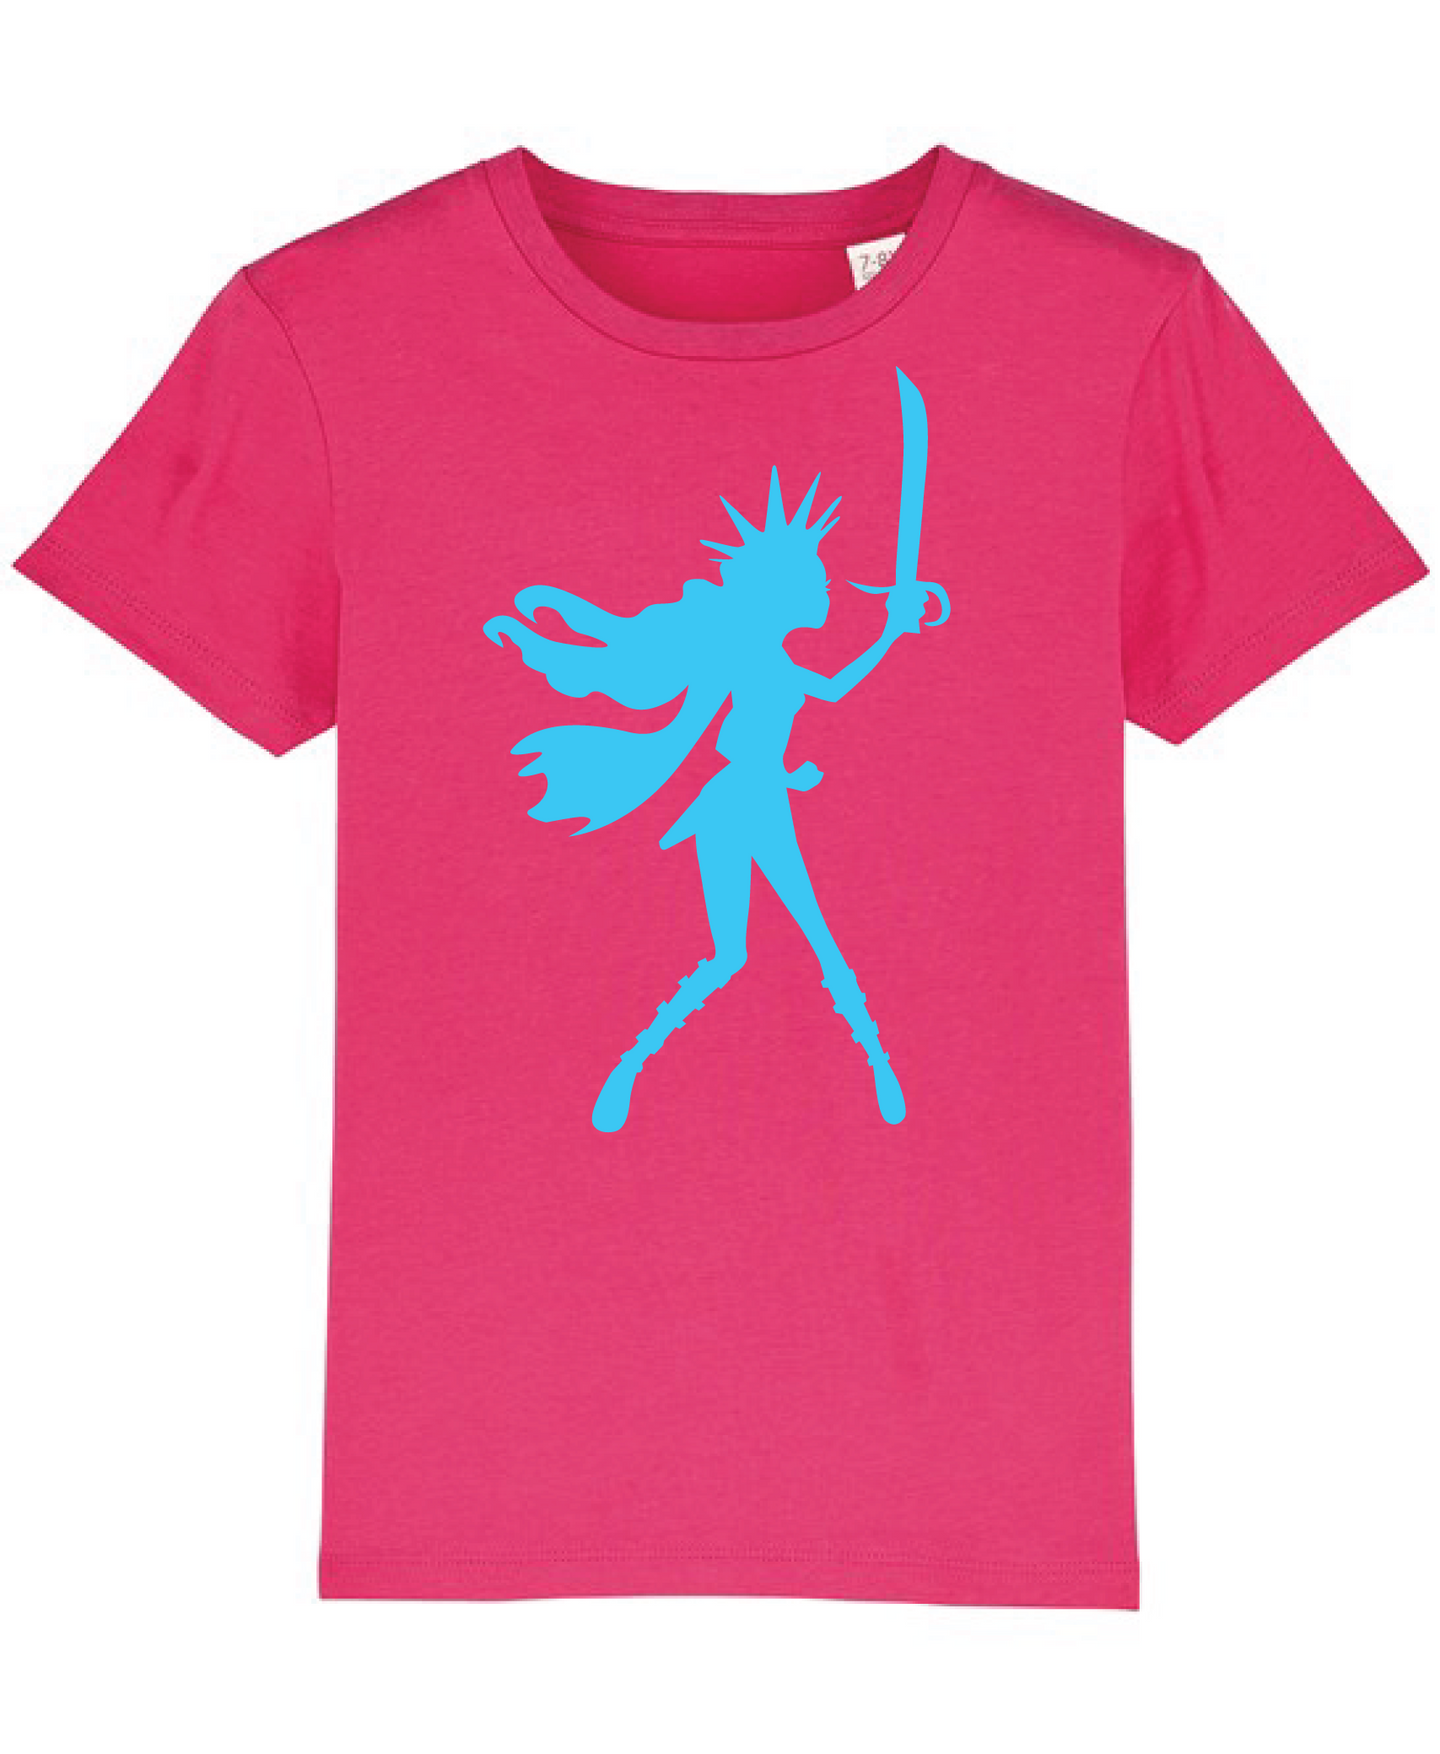 Girls New Raspberry Organic tee shirt with Turq Pirate Queen flock print.